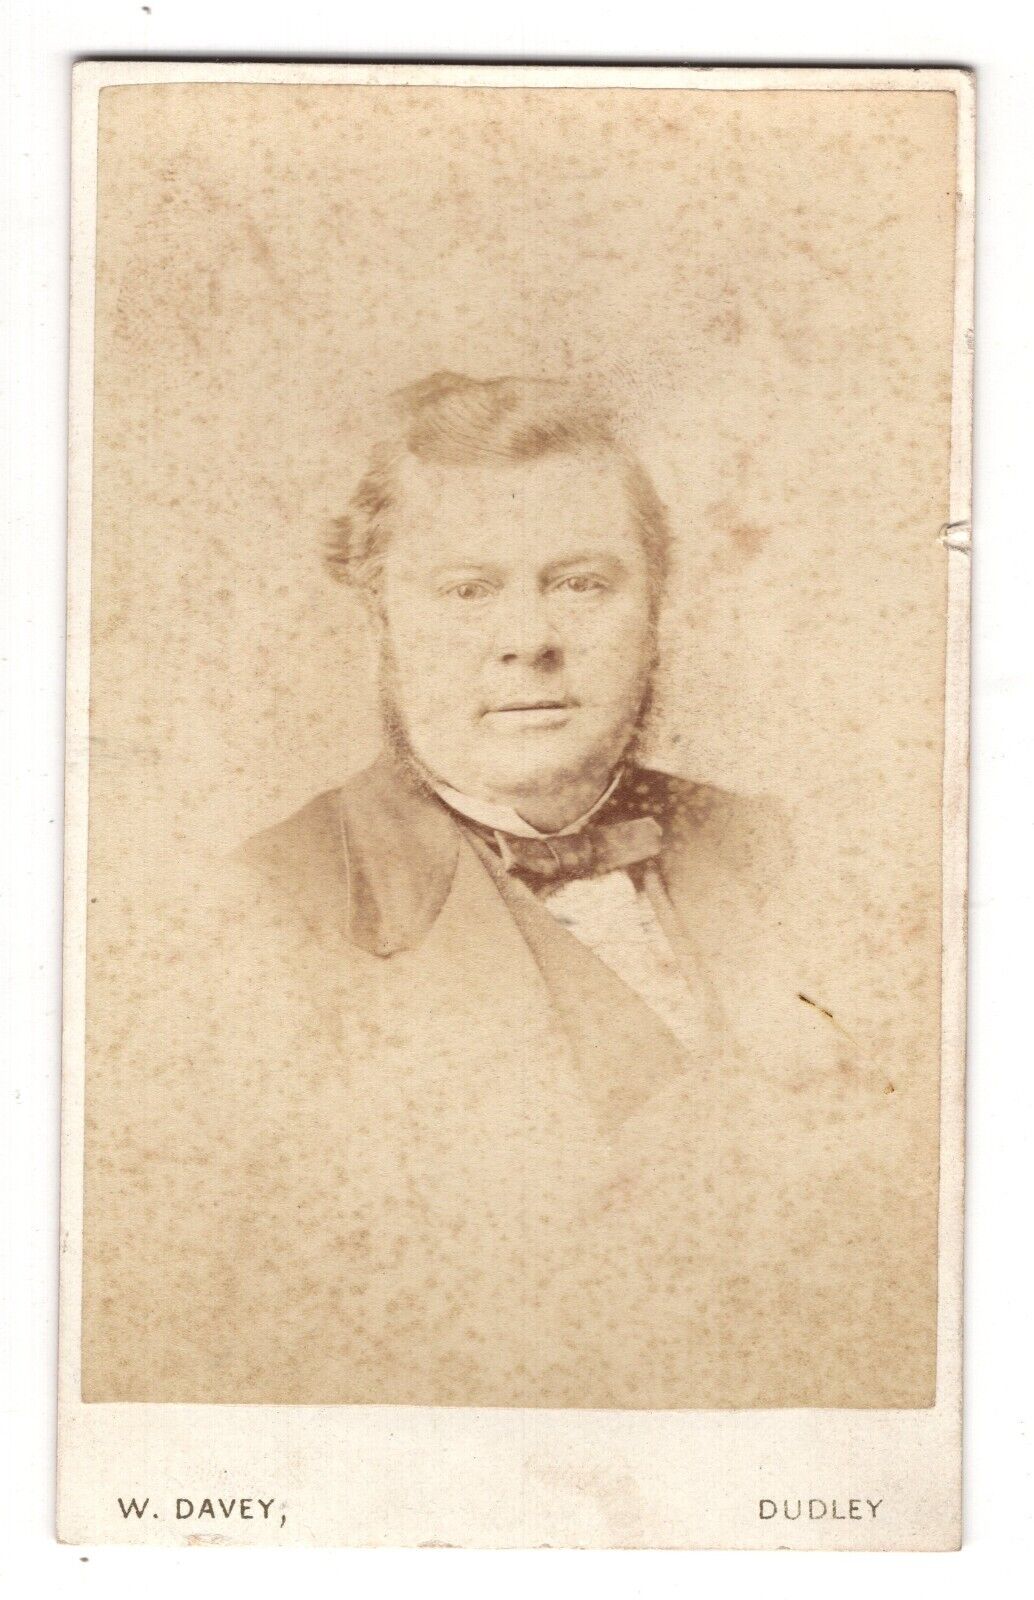 CIRCA 1870s CDV WILLIAM DAVEY FAT MAN IN SUIT DUDLEY ENGLAND